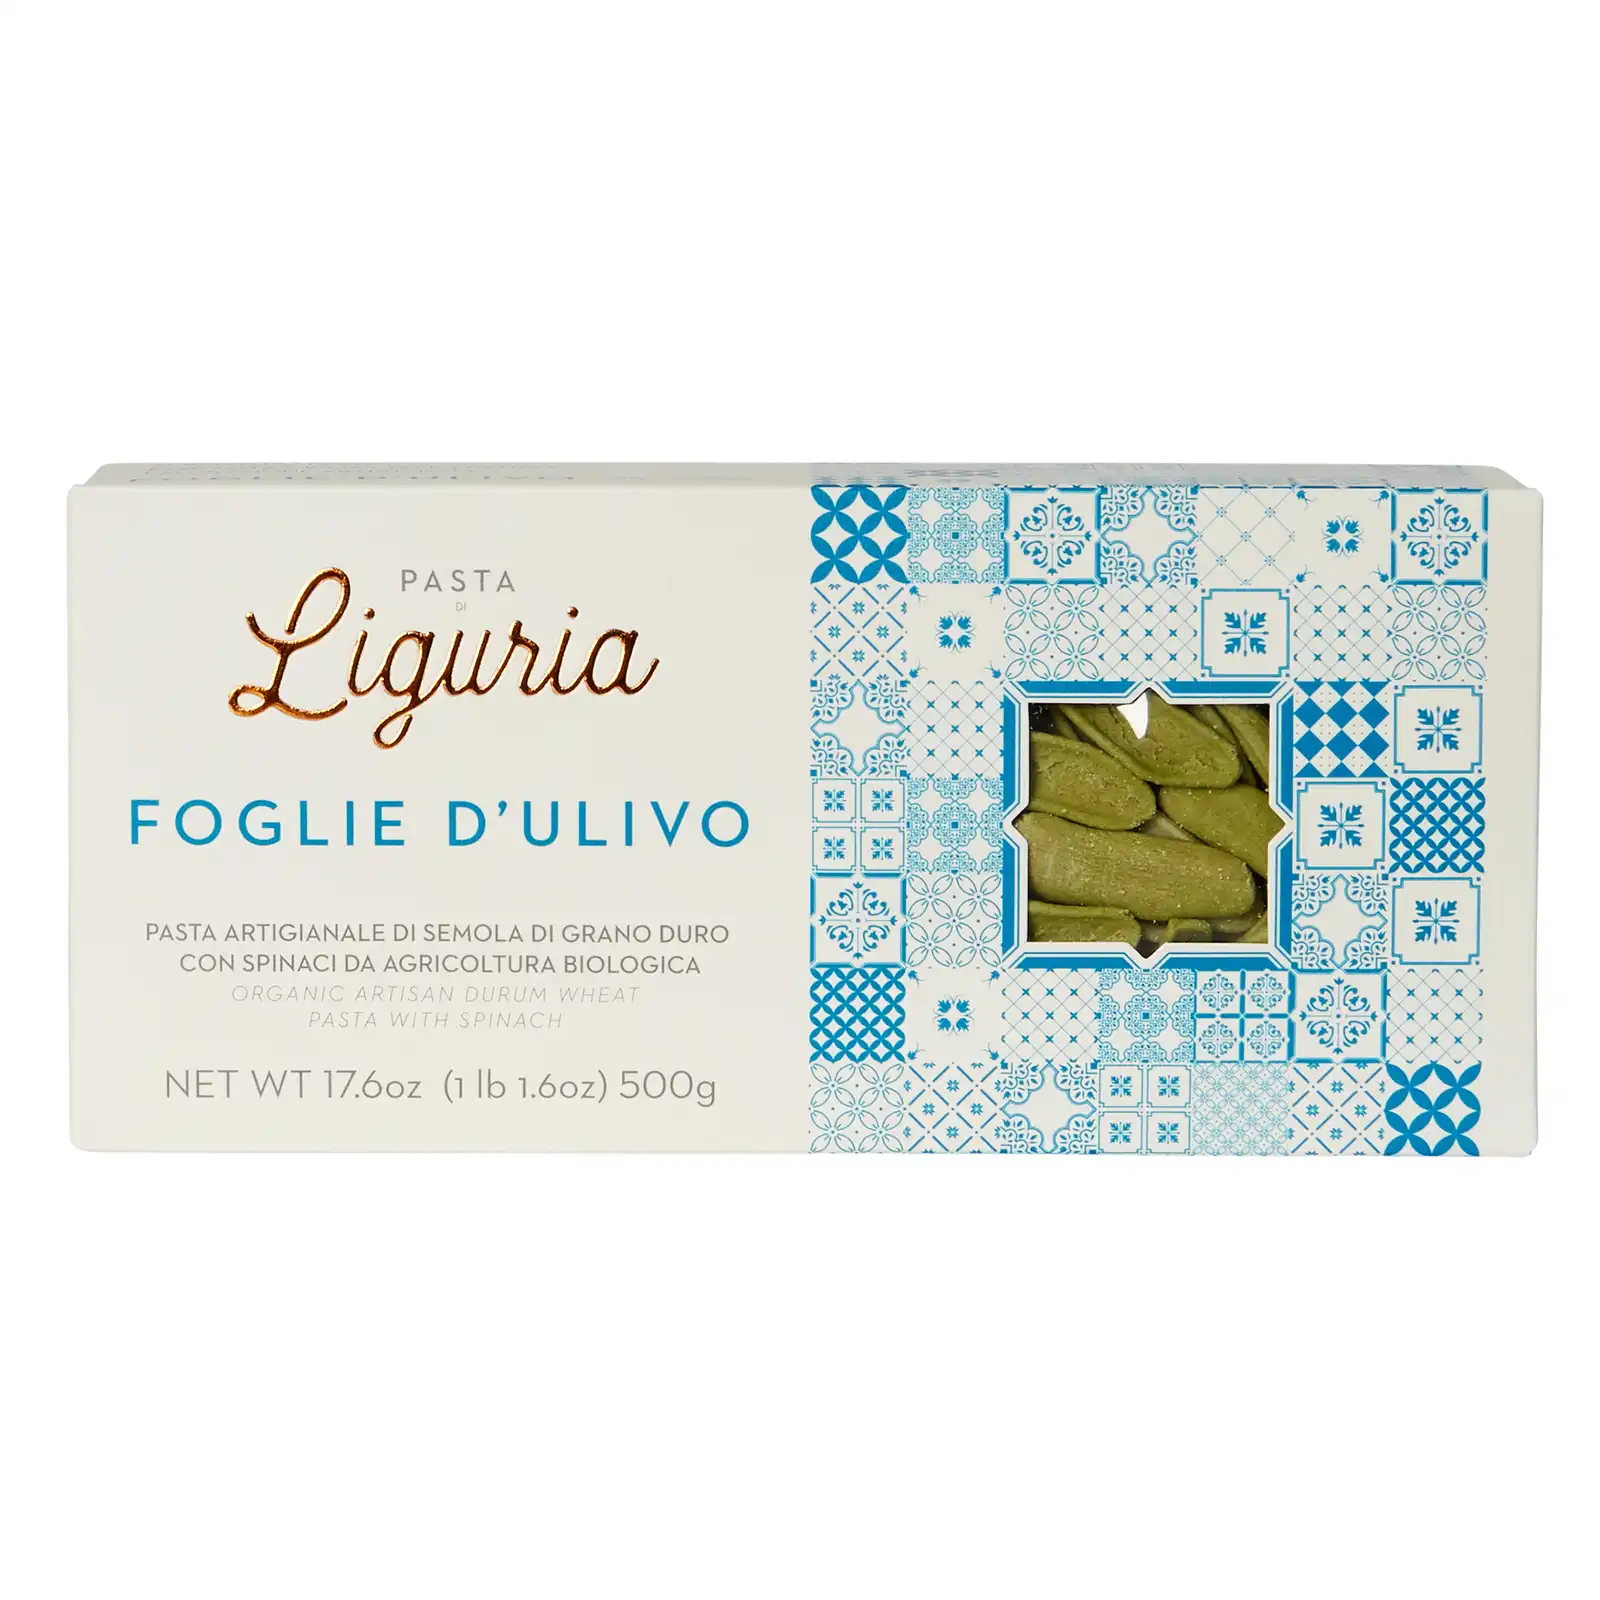 Liguria Pasta - Foglie D'ulivo 500g